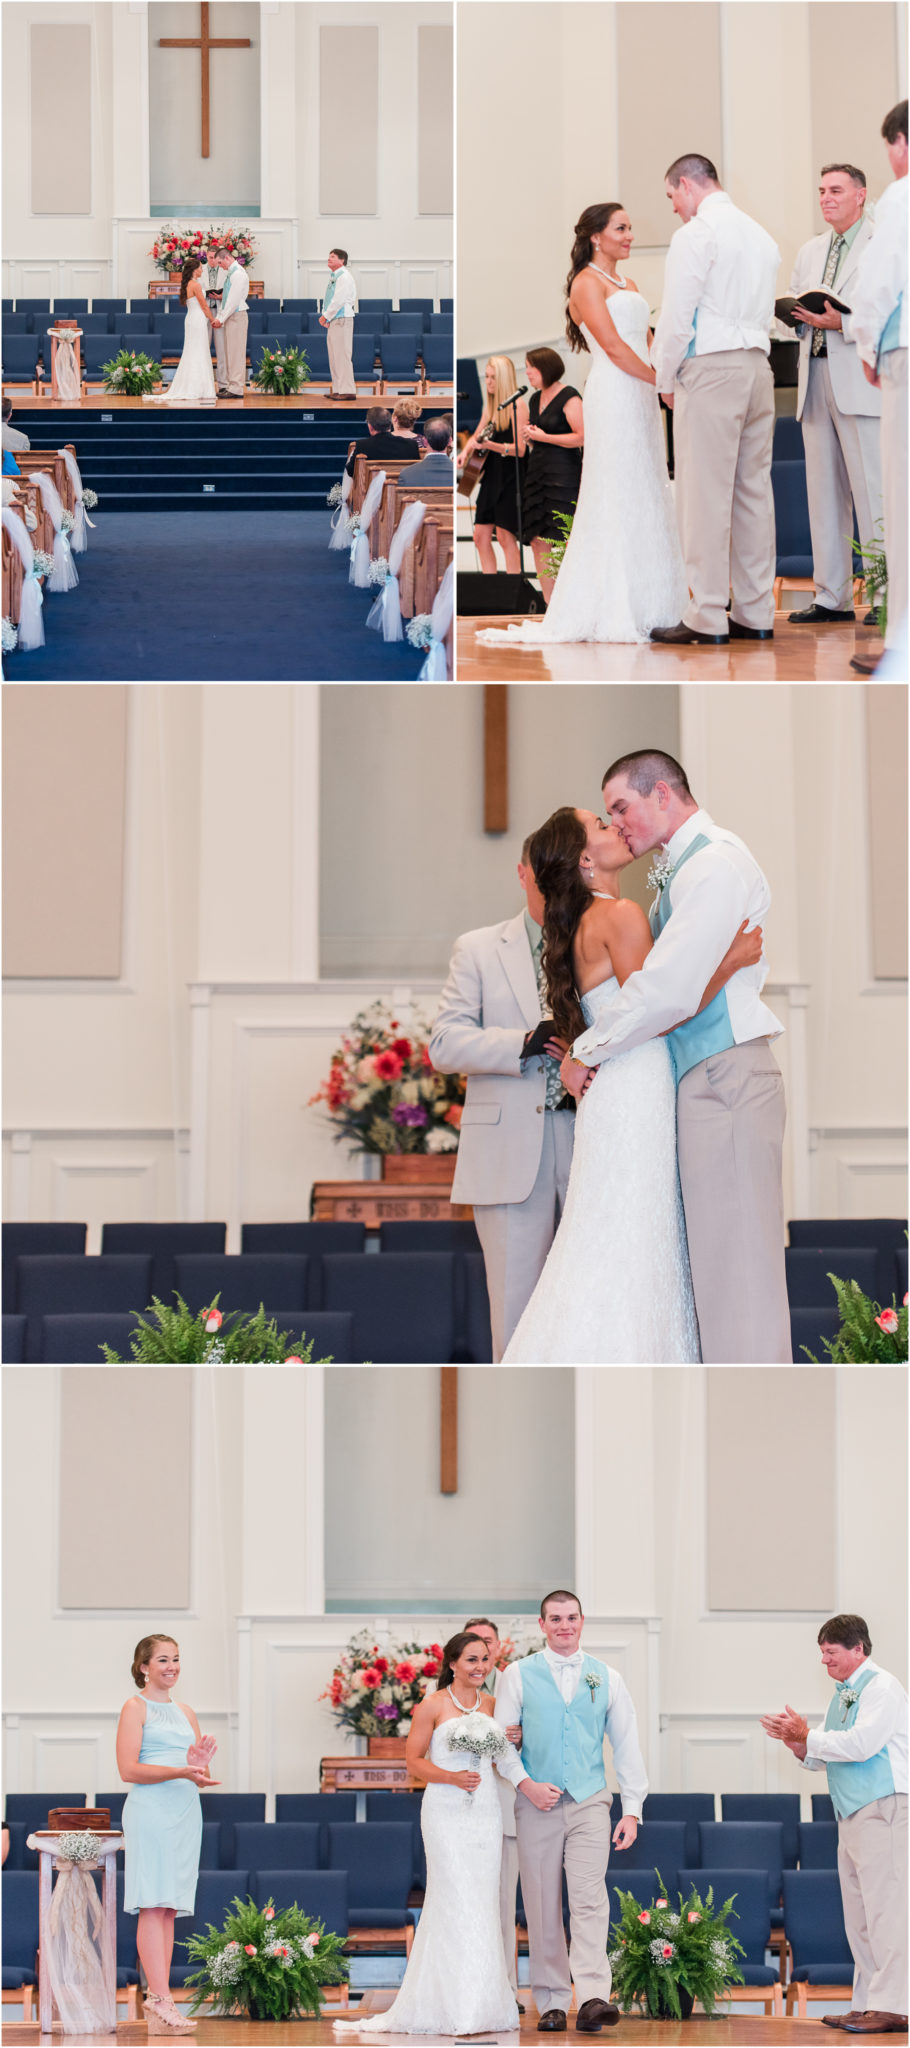 Calvary Baptist Church Wedding Ceremony in Williamston, SC.